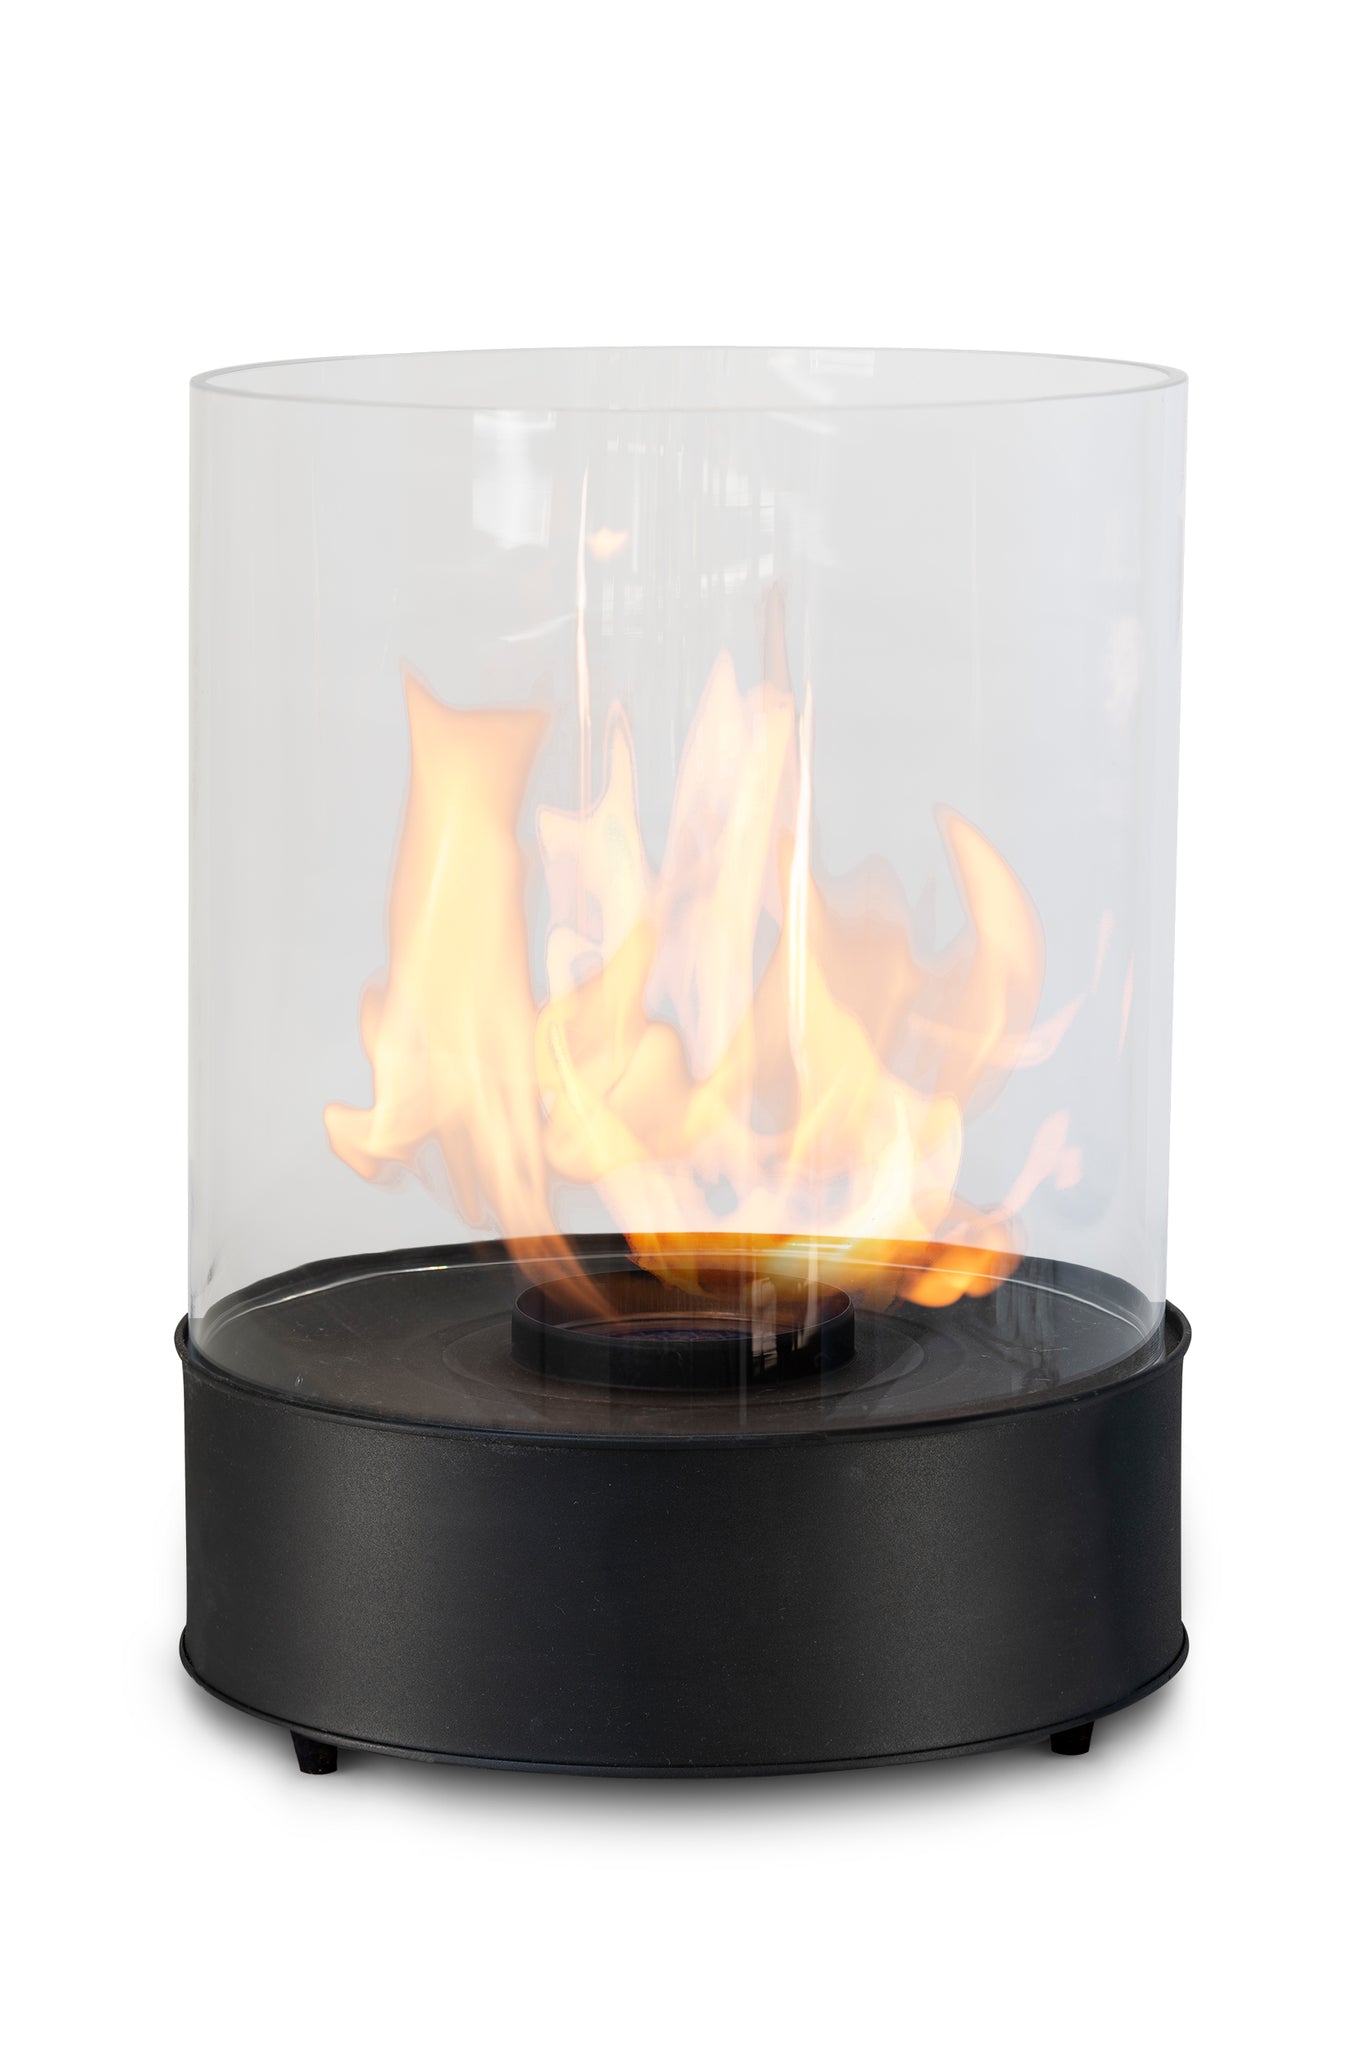 Planika Chantico - Portable bioethanol fireplace - Estufas Online